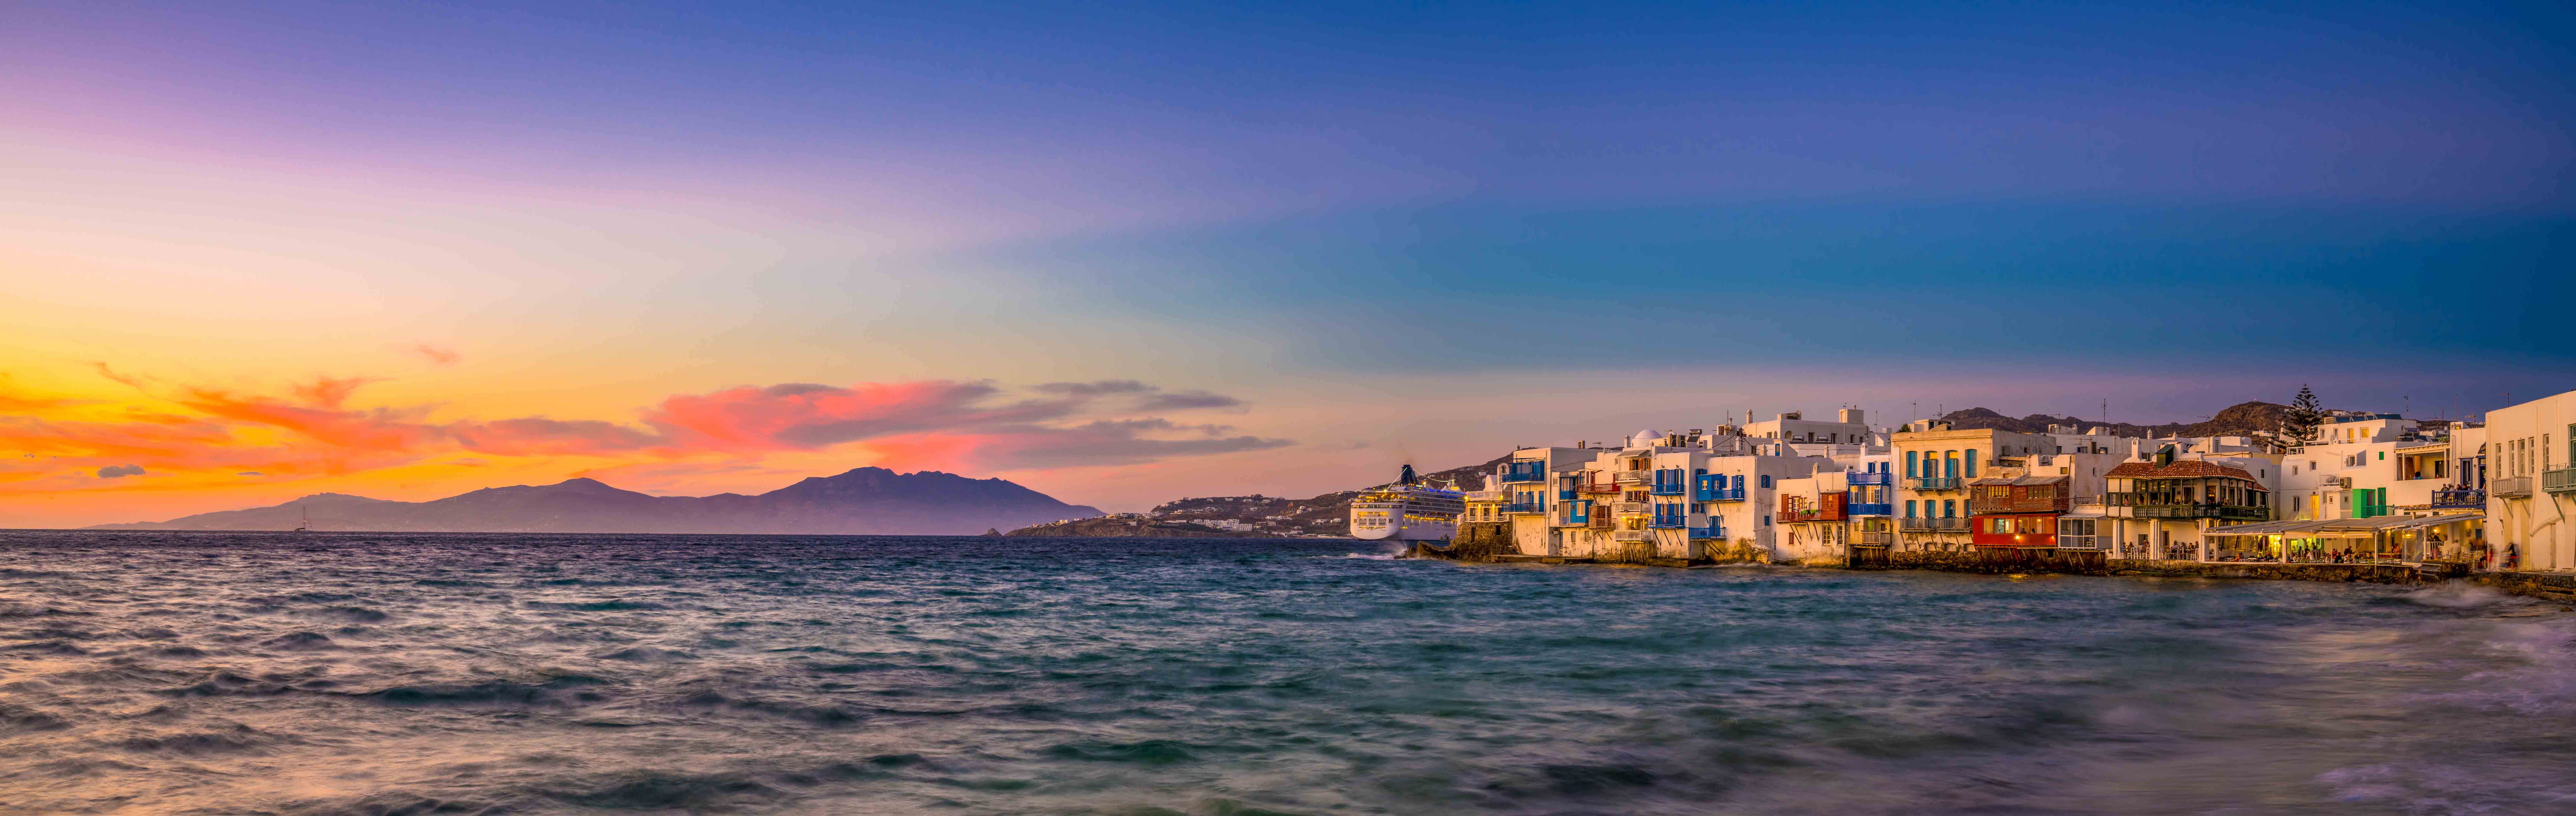 Mykonos, Naxos & Santorini - Multi Centre Travel and Bucket List Trip